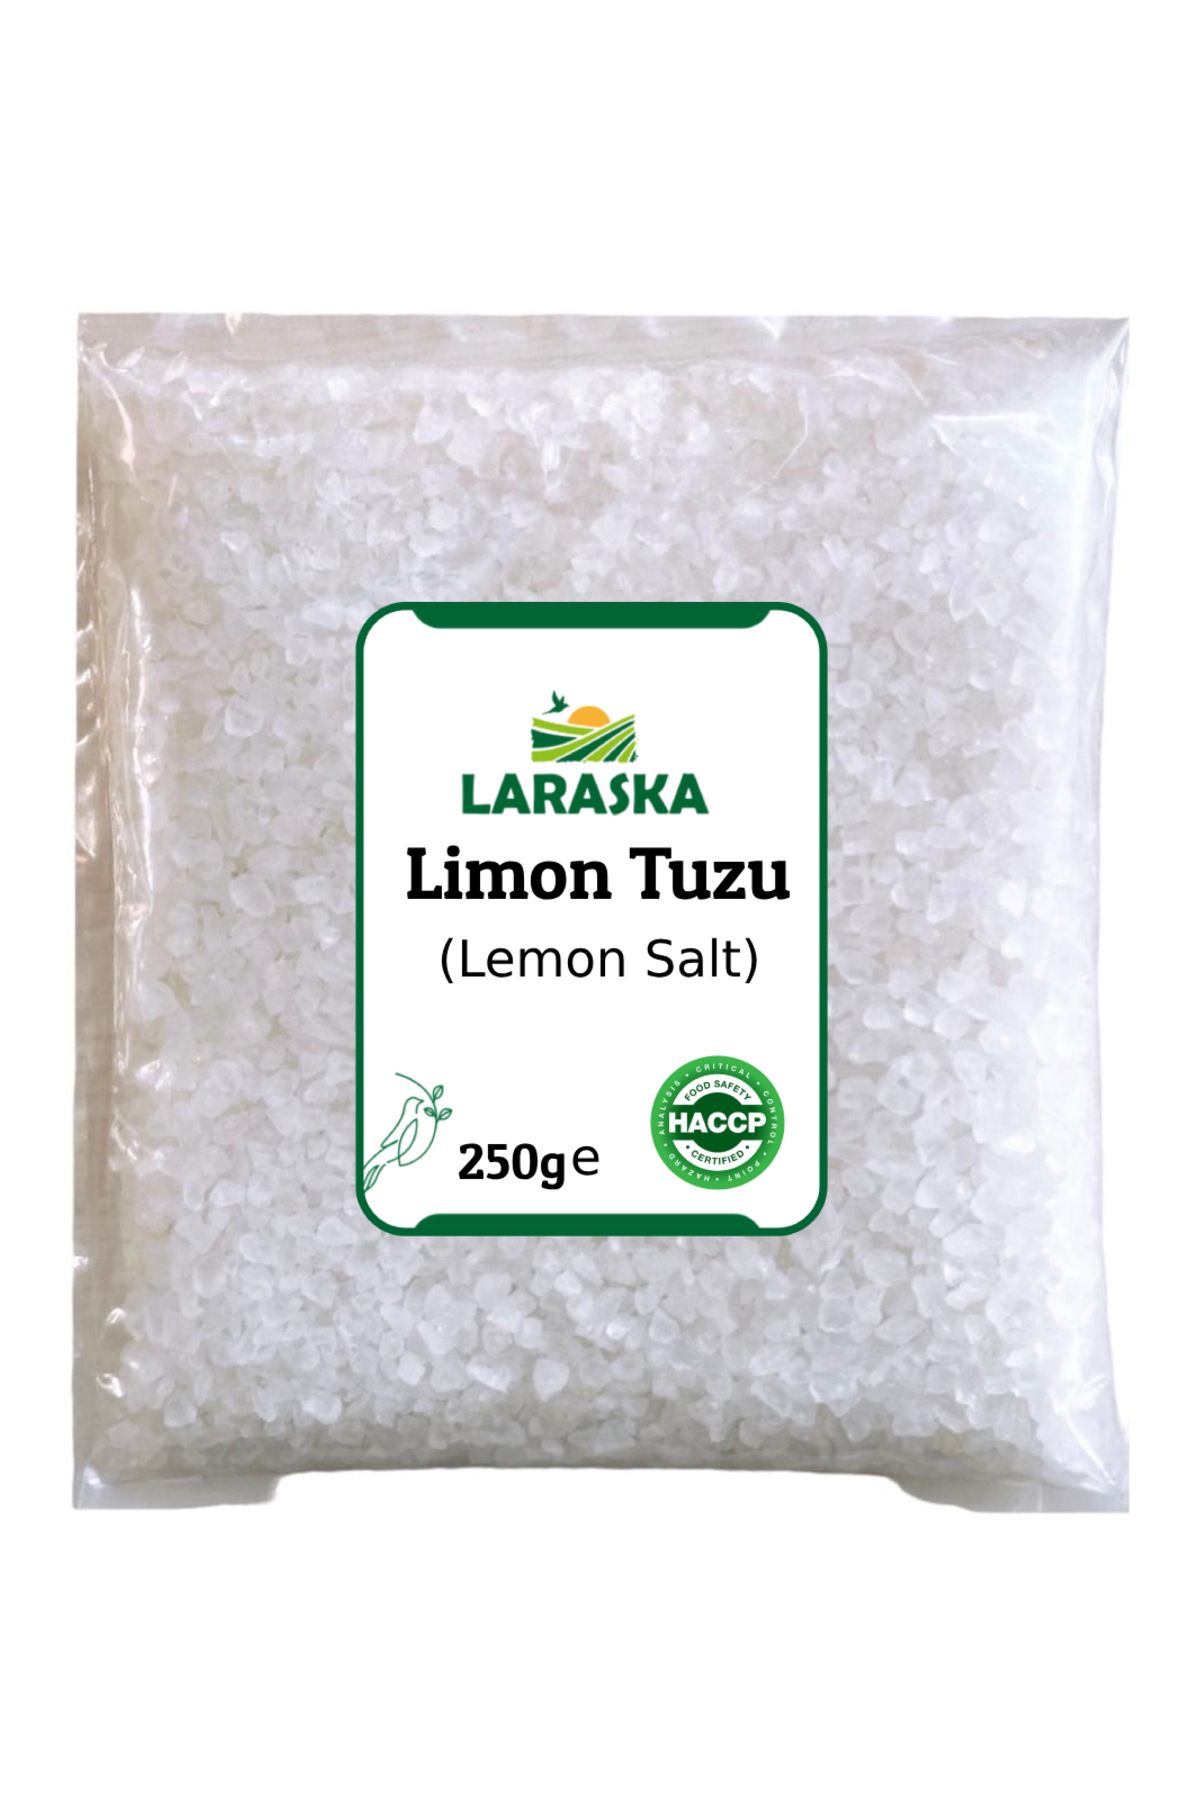 Laraska Limon Tuzu 250g - Lemon Salt 250g